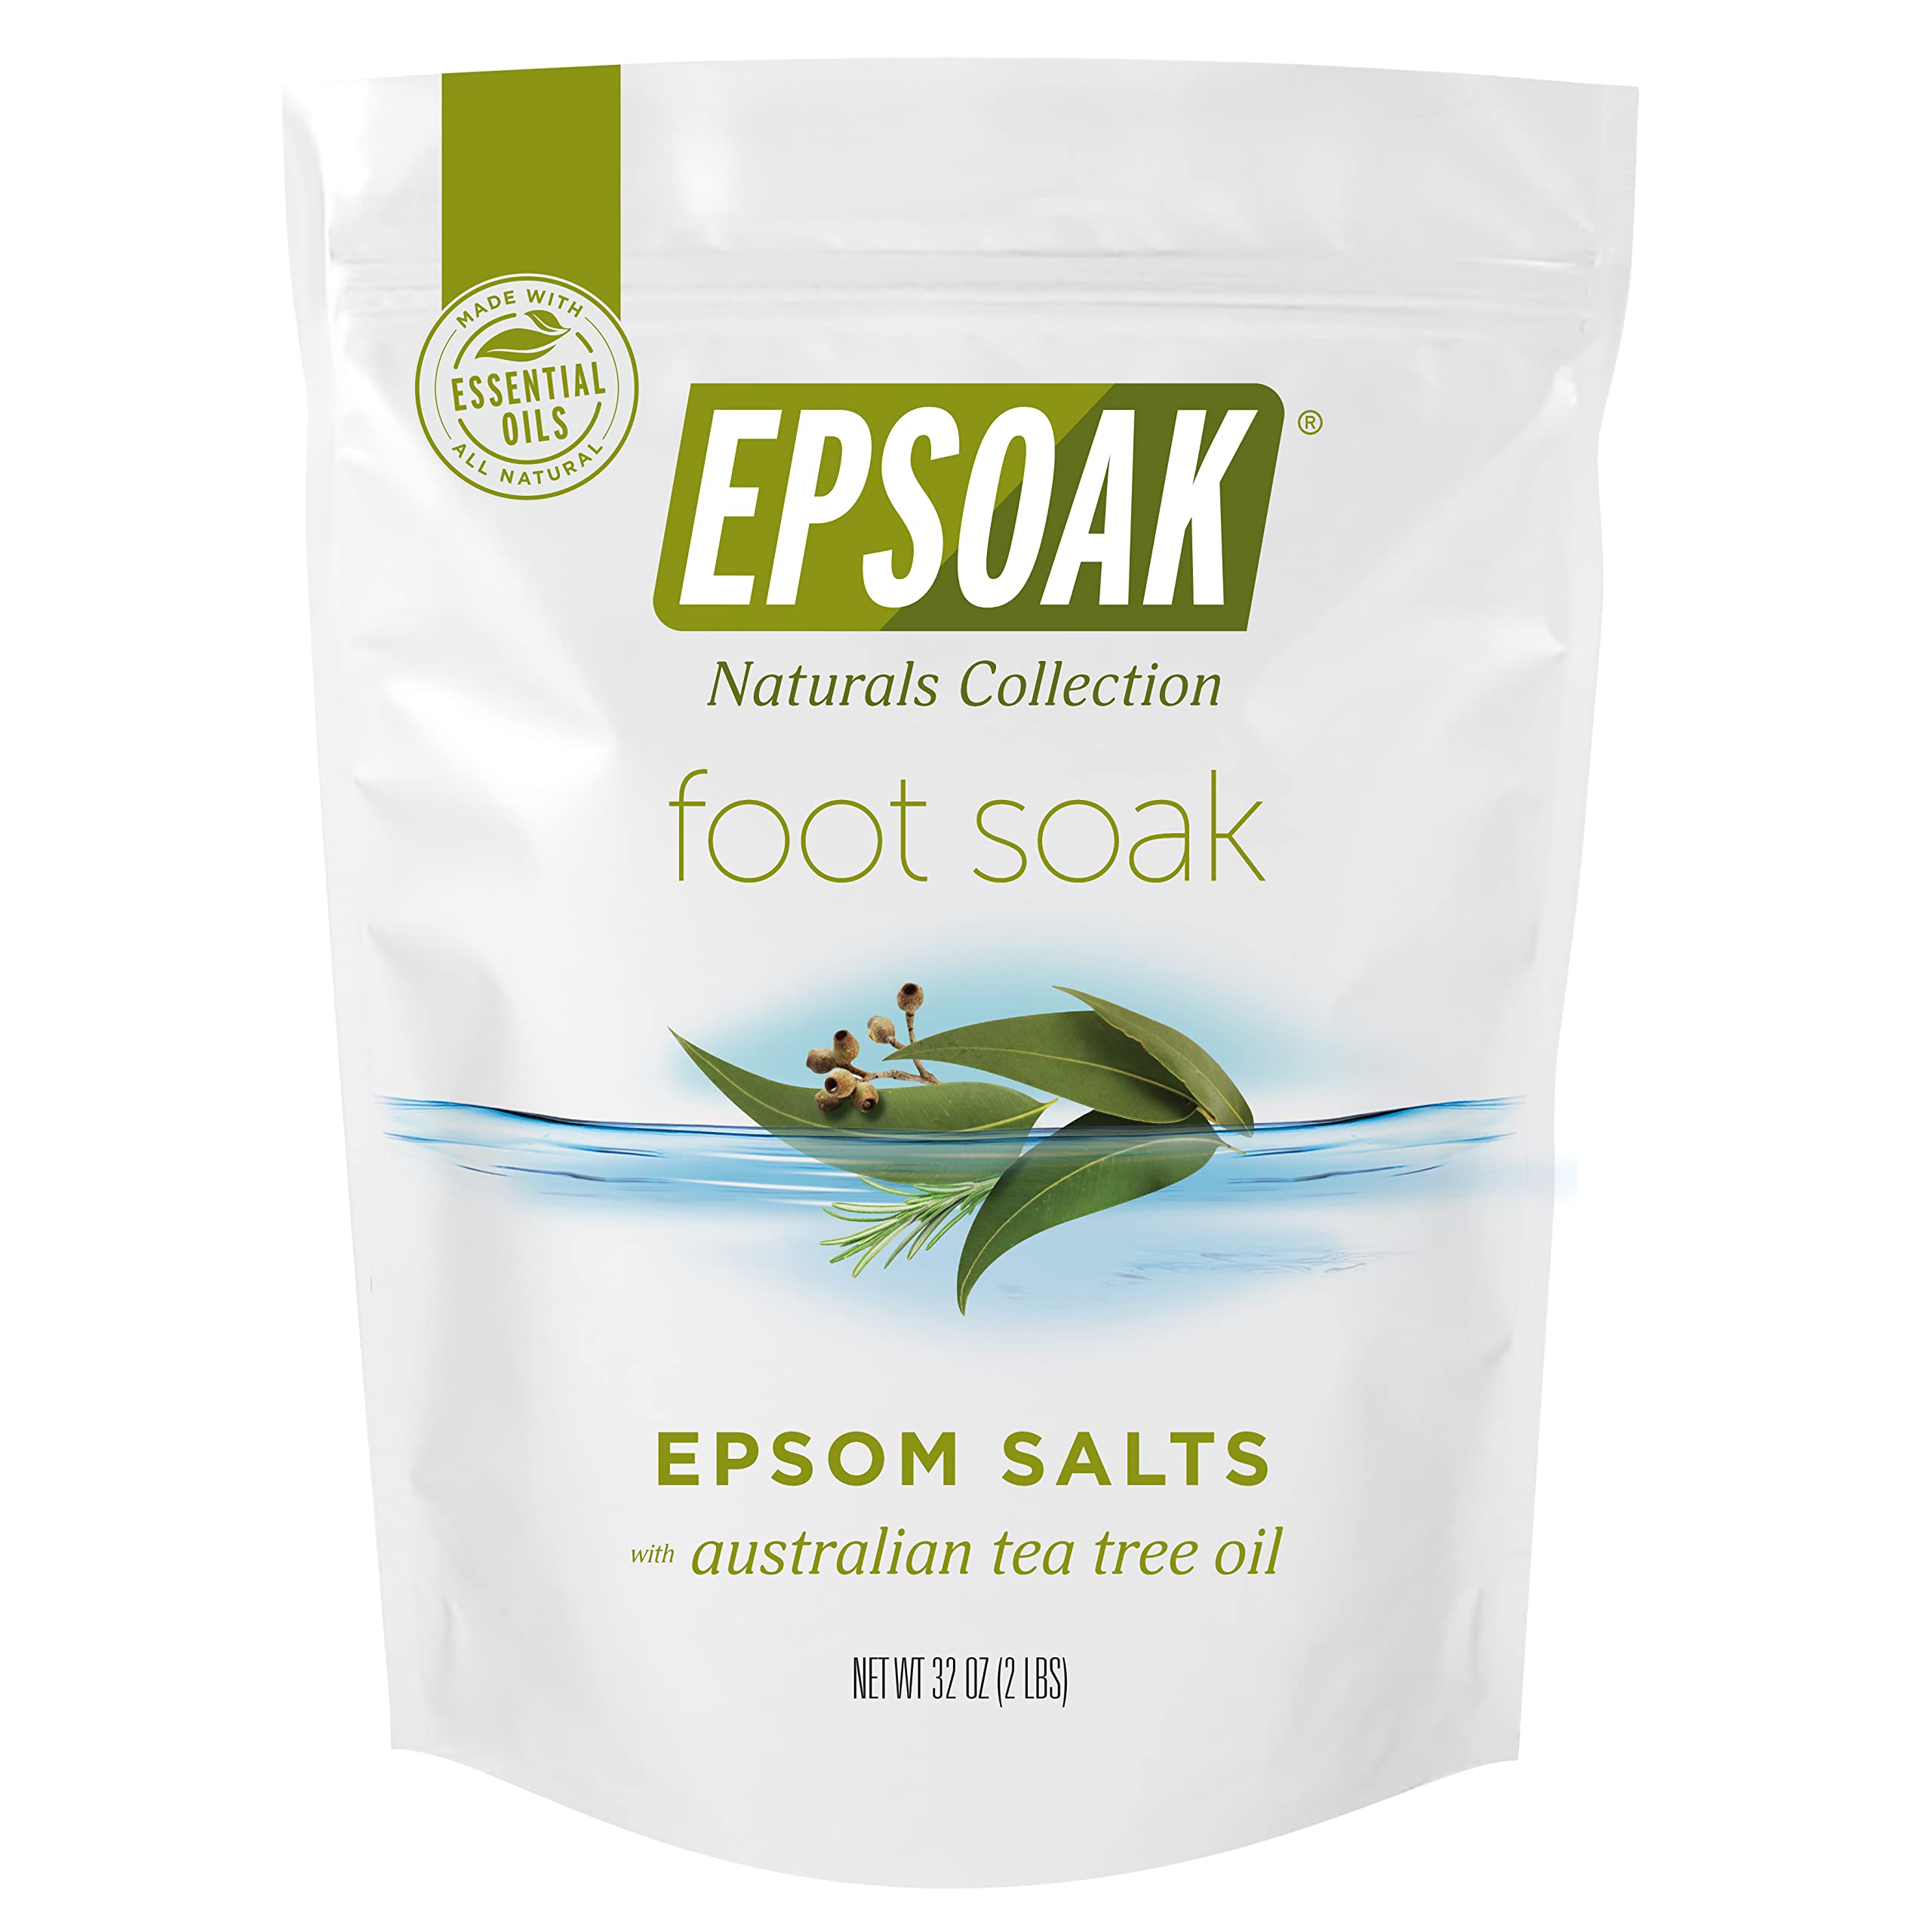 Tea Tree Oil Foot Soak with Epsoak Epsom Salt - 2 Pound Value Bag - Made in The USA